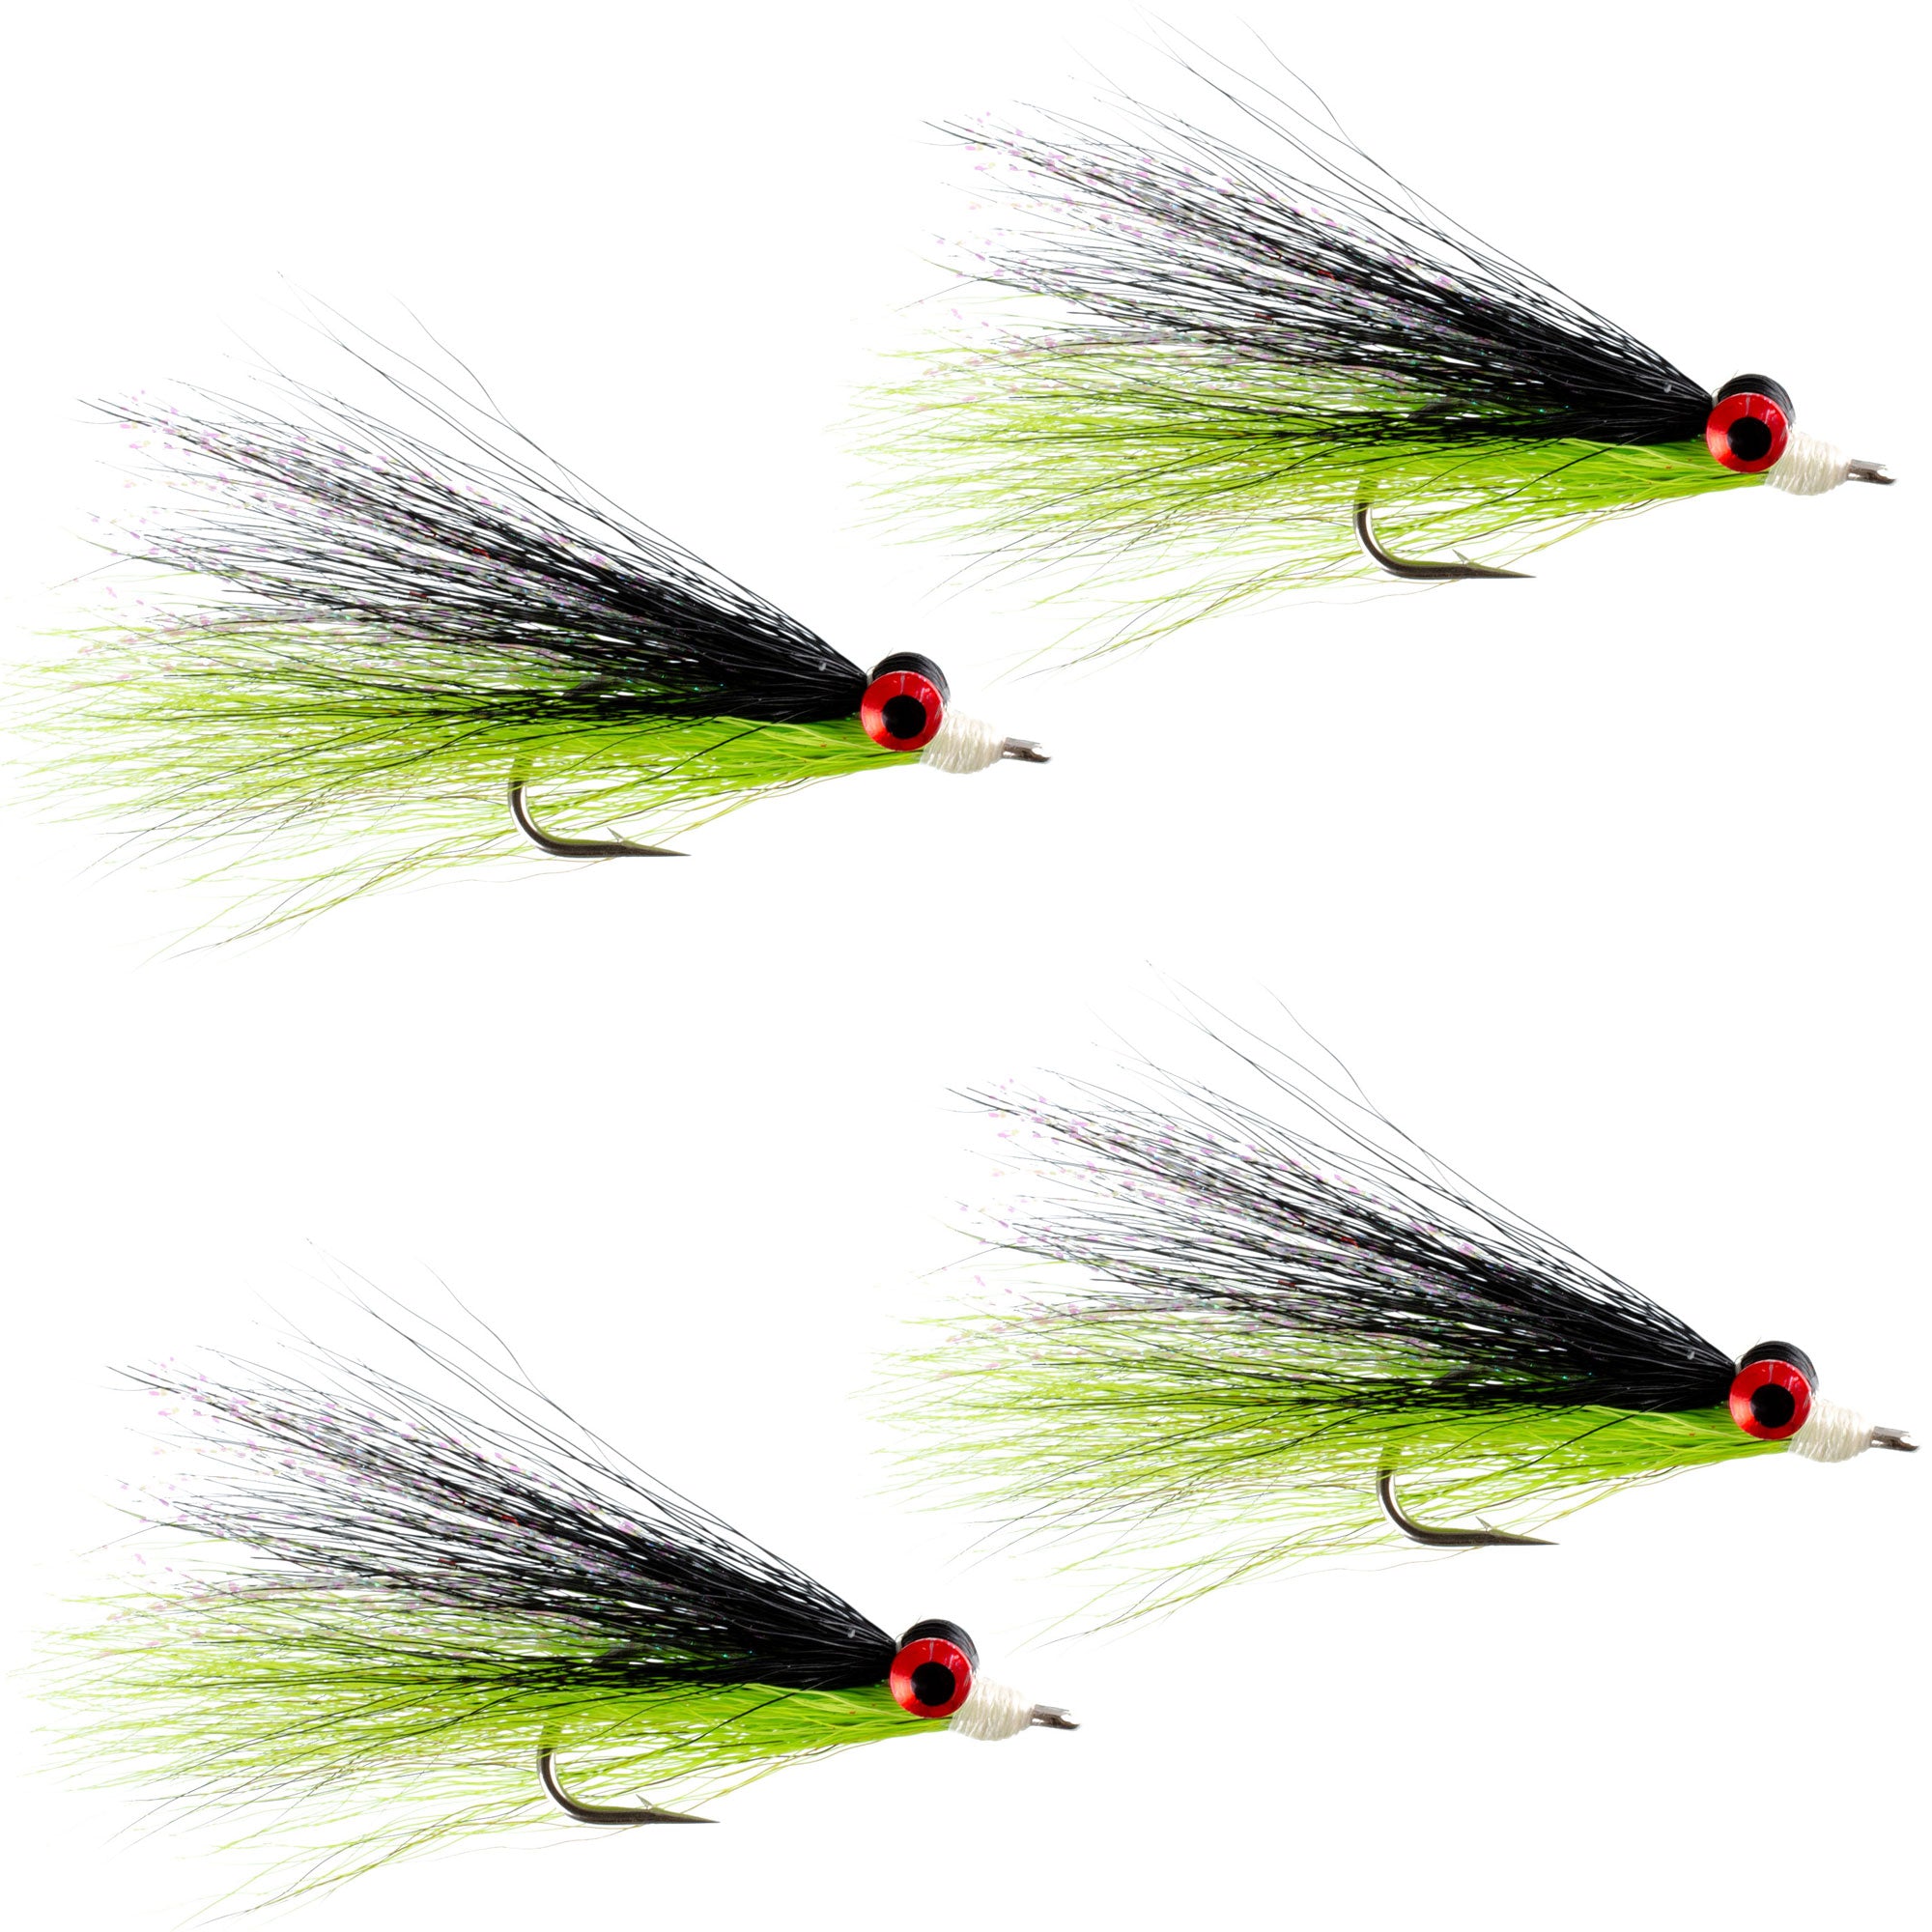 Clousers Deep Minnow Chartreuse Black - Moscas de pesca con mosca Streamer - 4 moscas de agua salada y lubina - Tamaño del anzuelo 1/0 